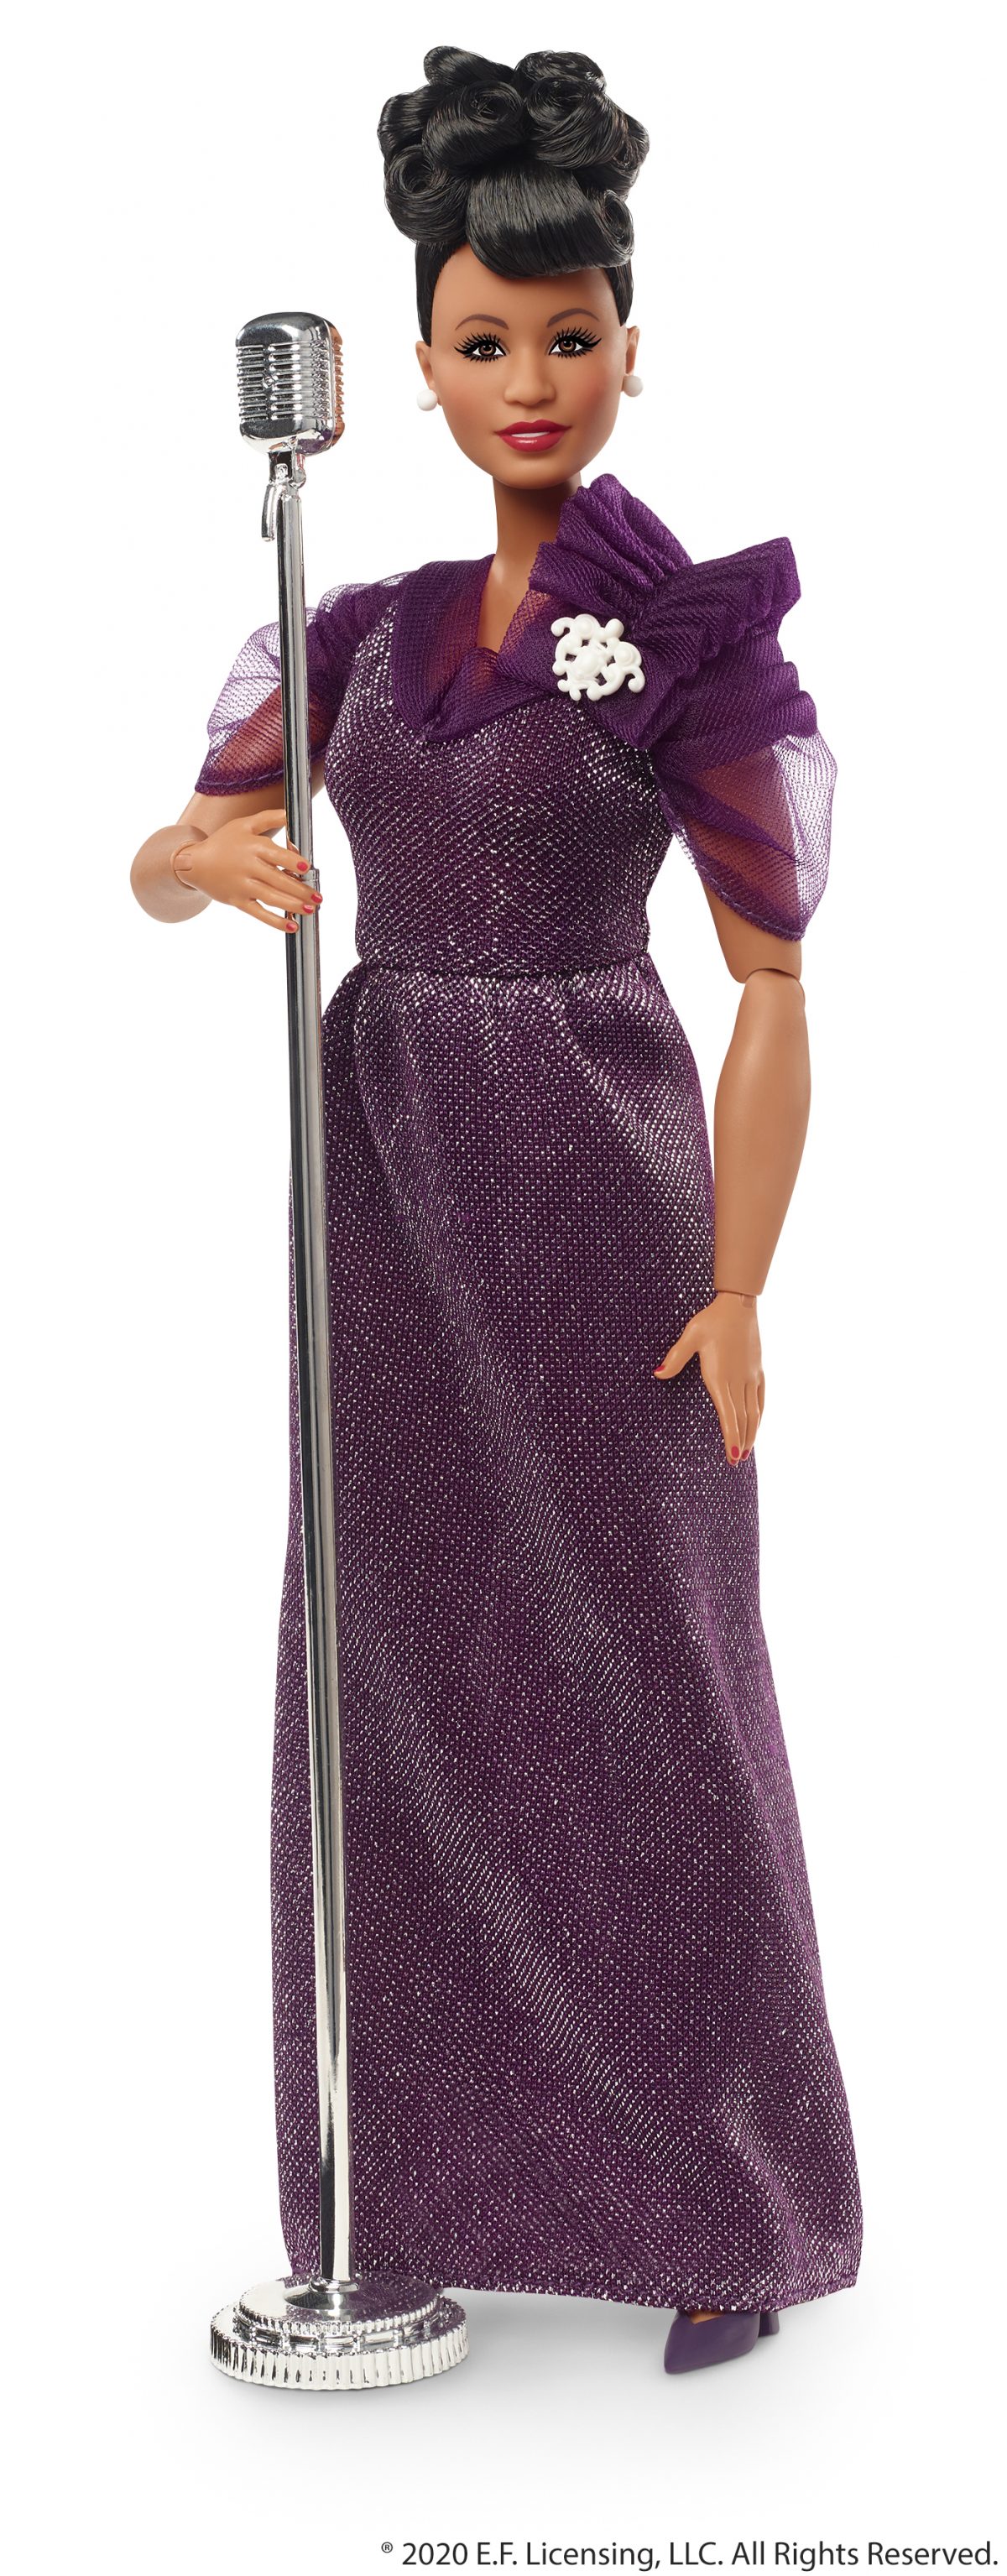 Ella Fitzgerald Barbie